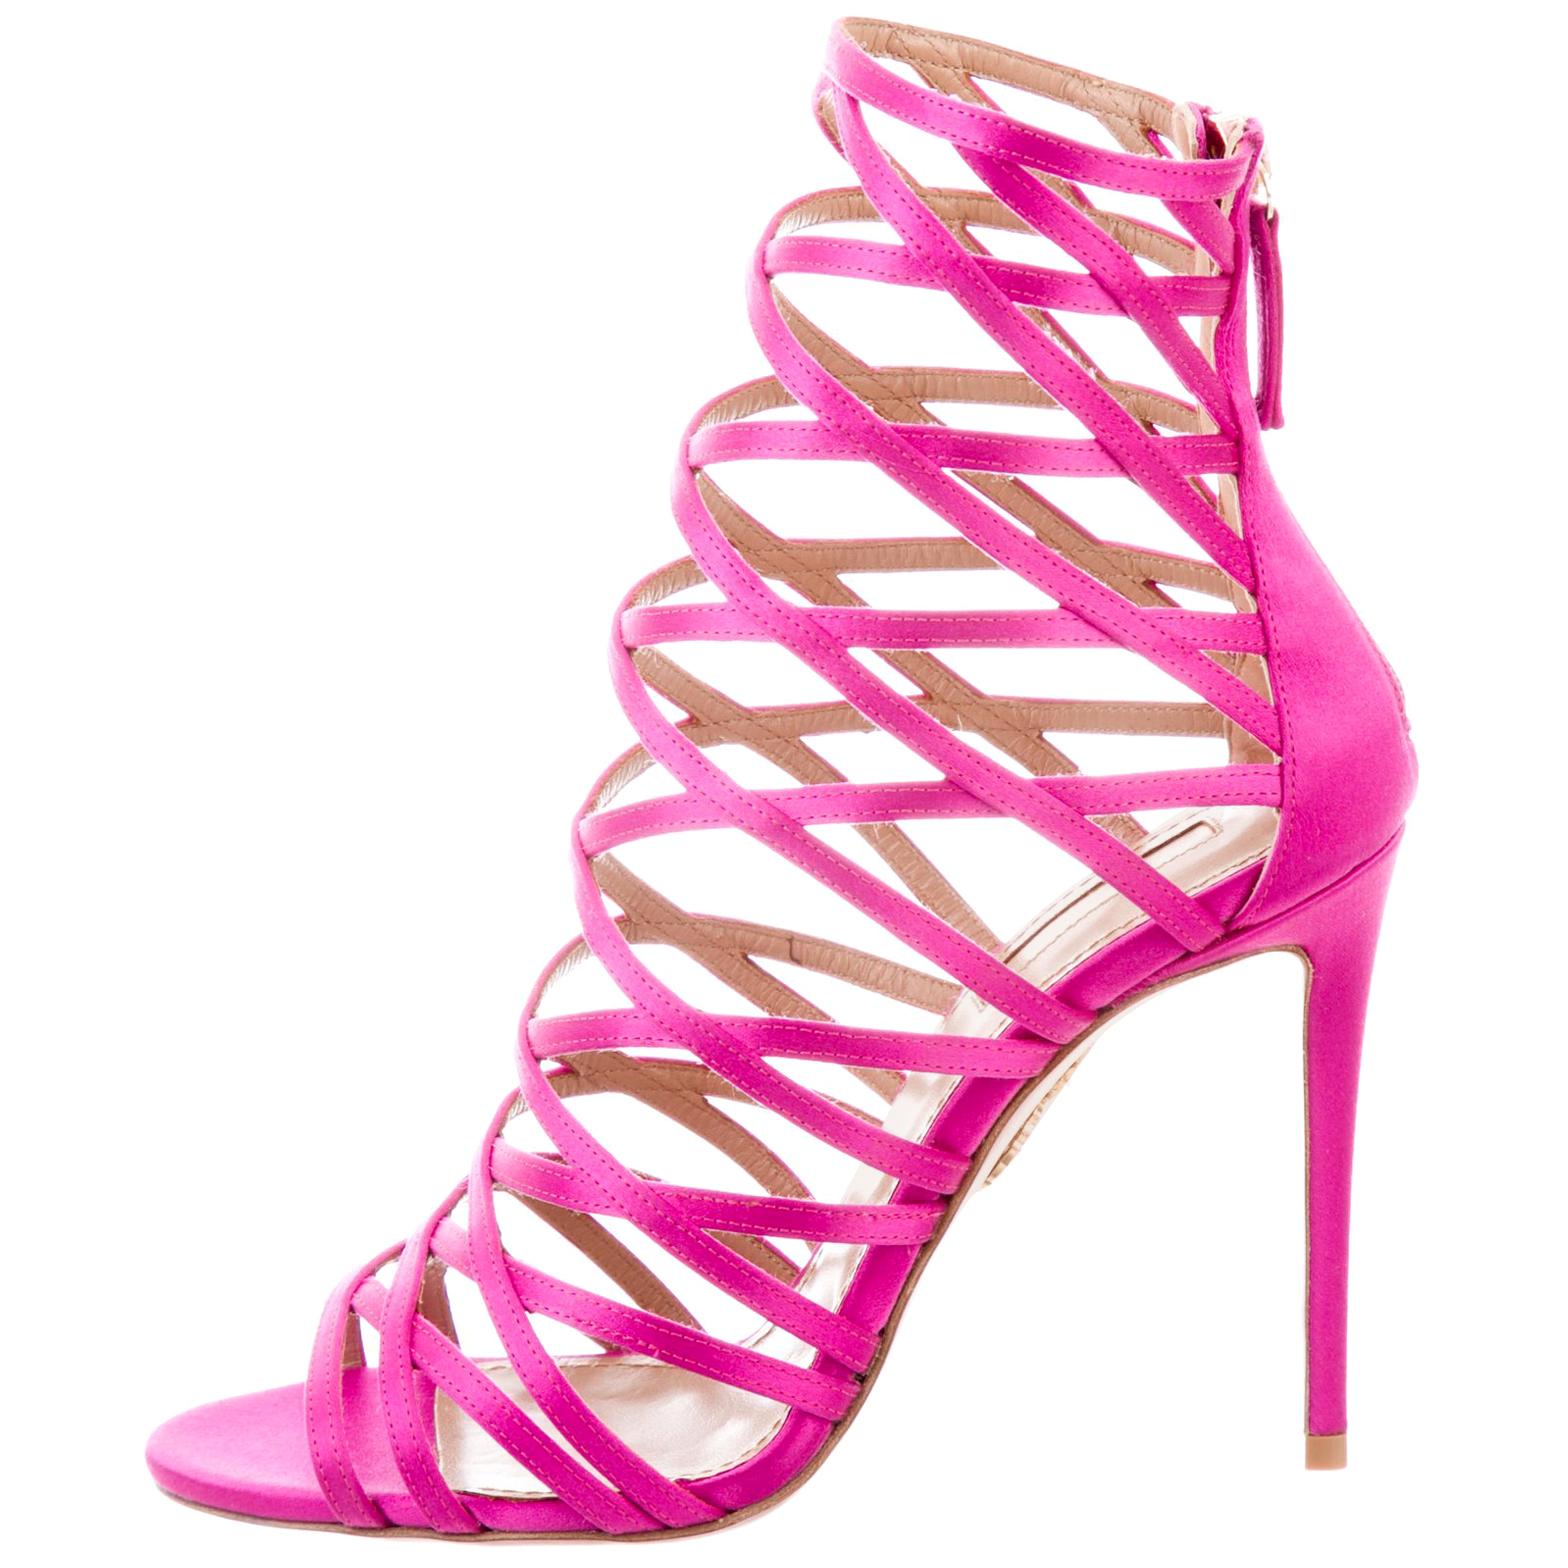 Aquazzura NEW Hot Pink Fuchsia Satin Cut Out Gladiator Evening Sandals Heels